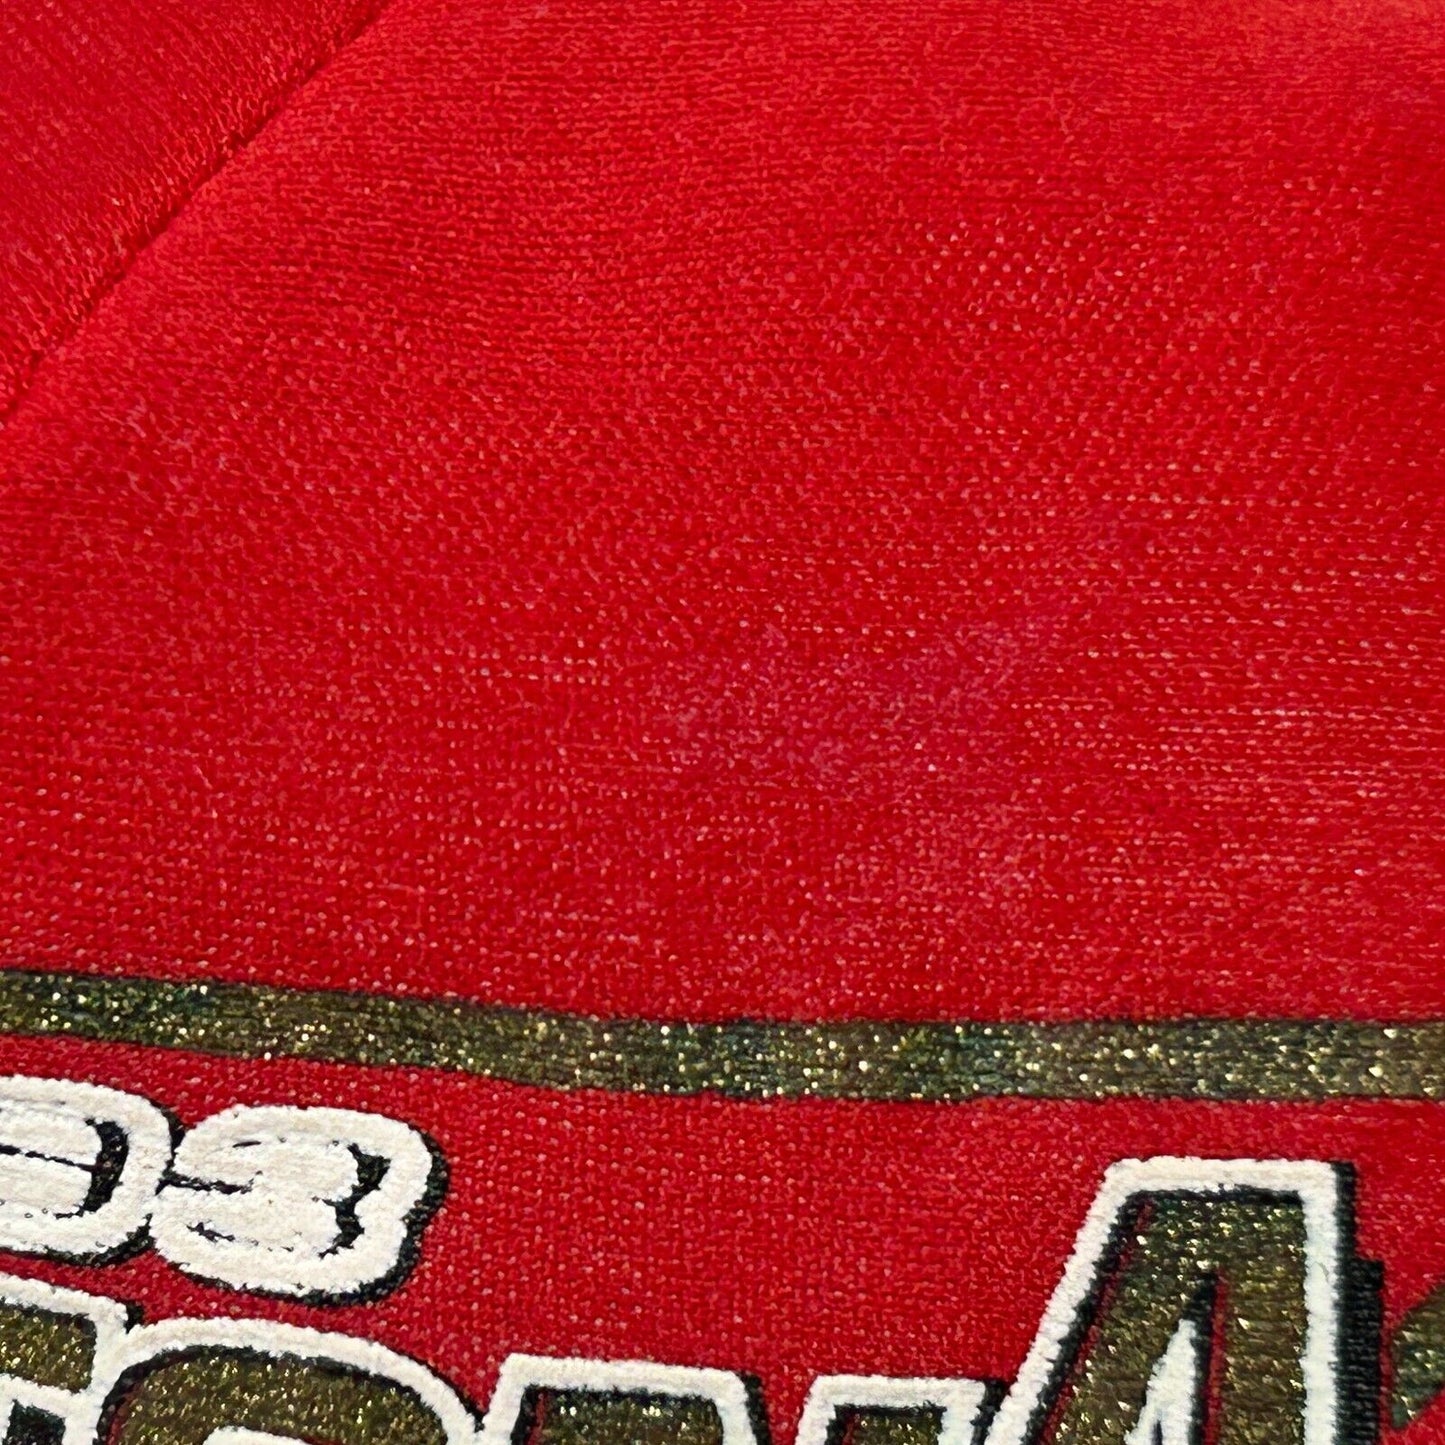 NASCAR Daytona 500 Vintage 90s Trucker Hat 1993 Winston Cup USA Red Baseball Cap